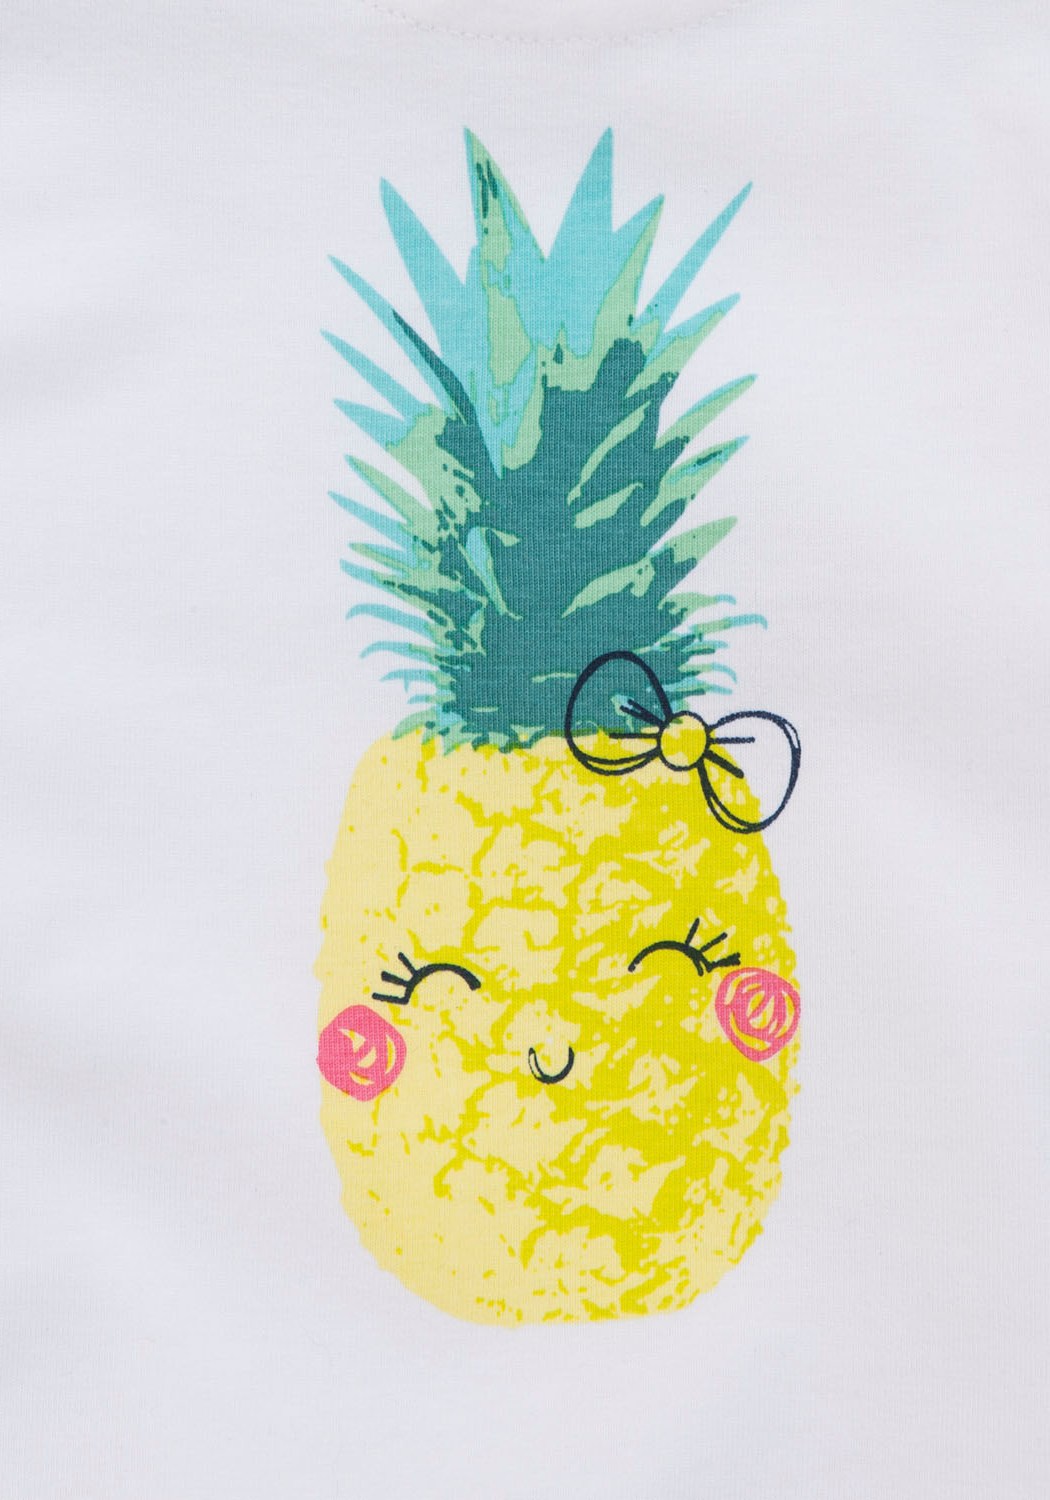 Cute Pineapple Iphone Wallpapers